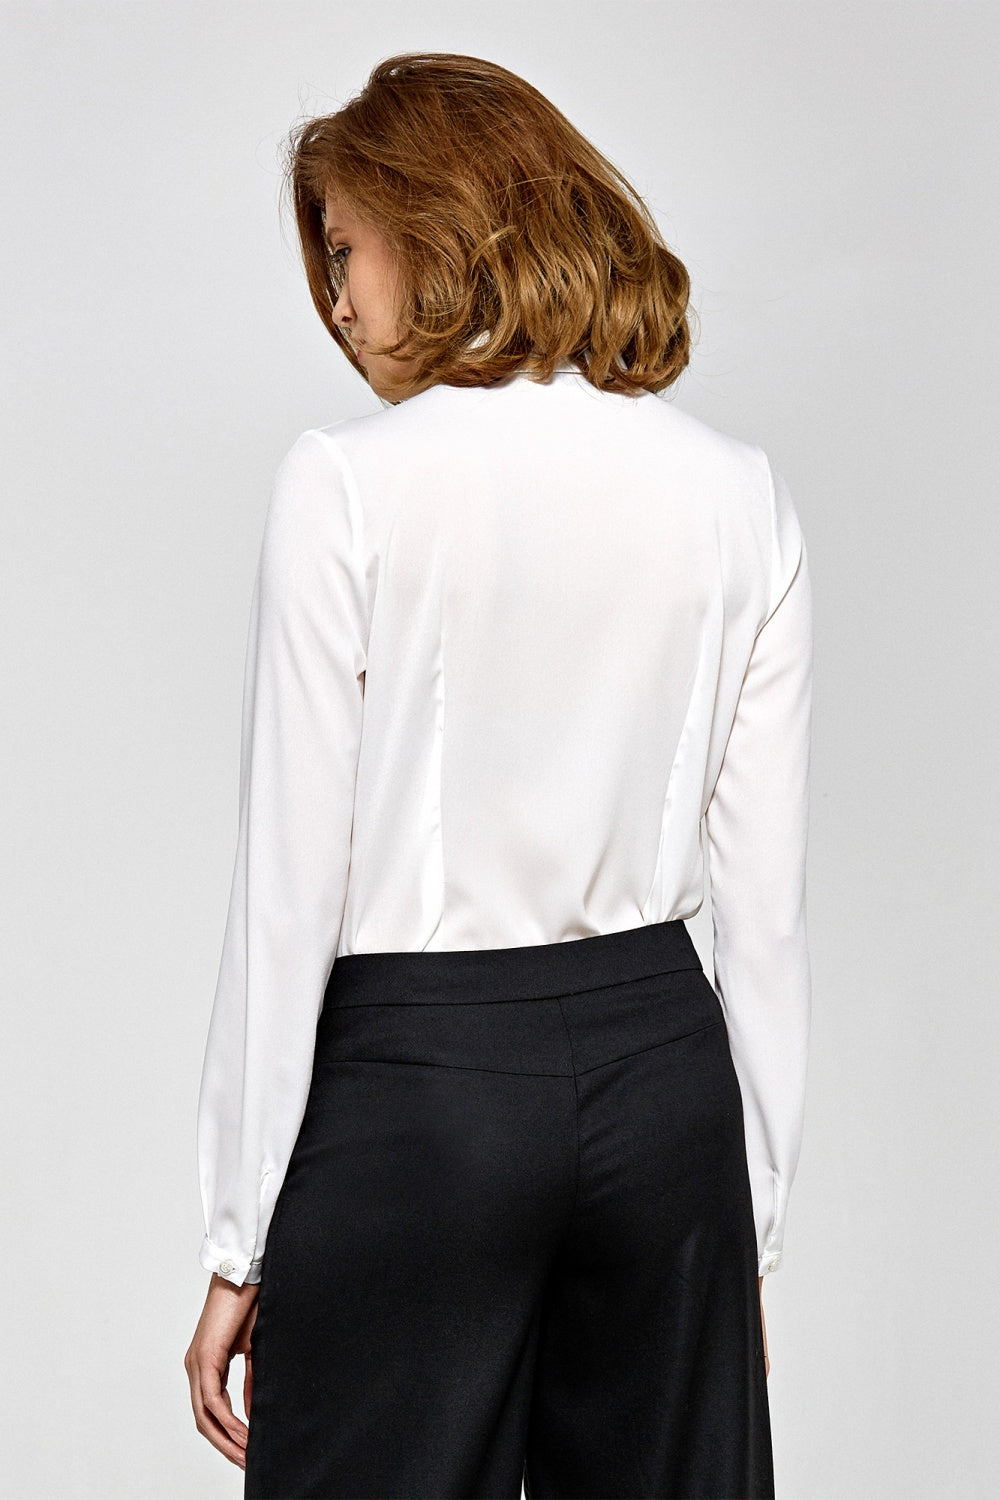 Long sleeve shirt model 149561 Elsy Style Shirts for Women